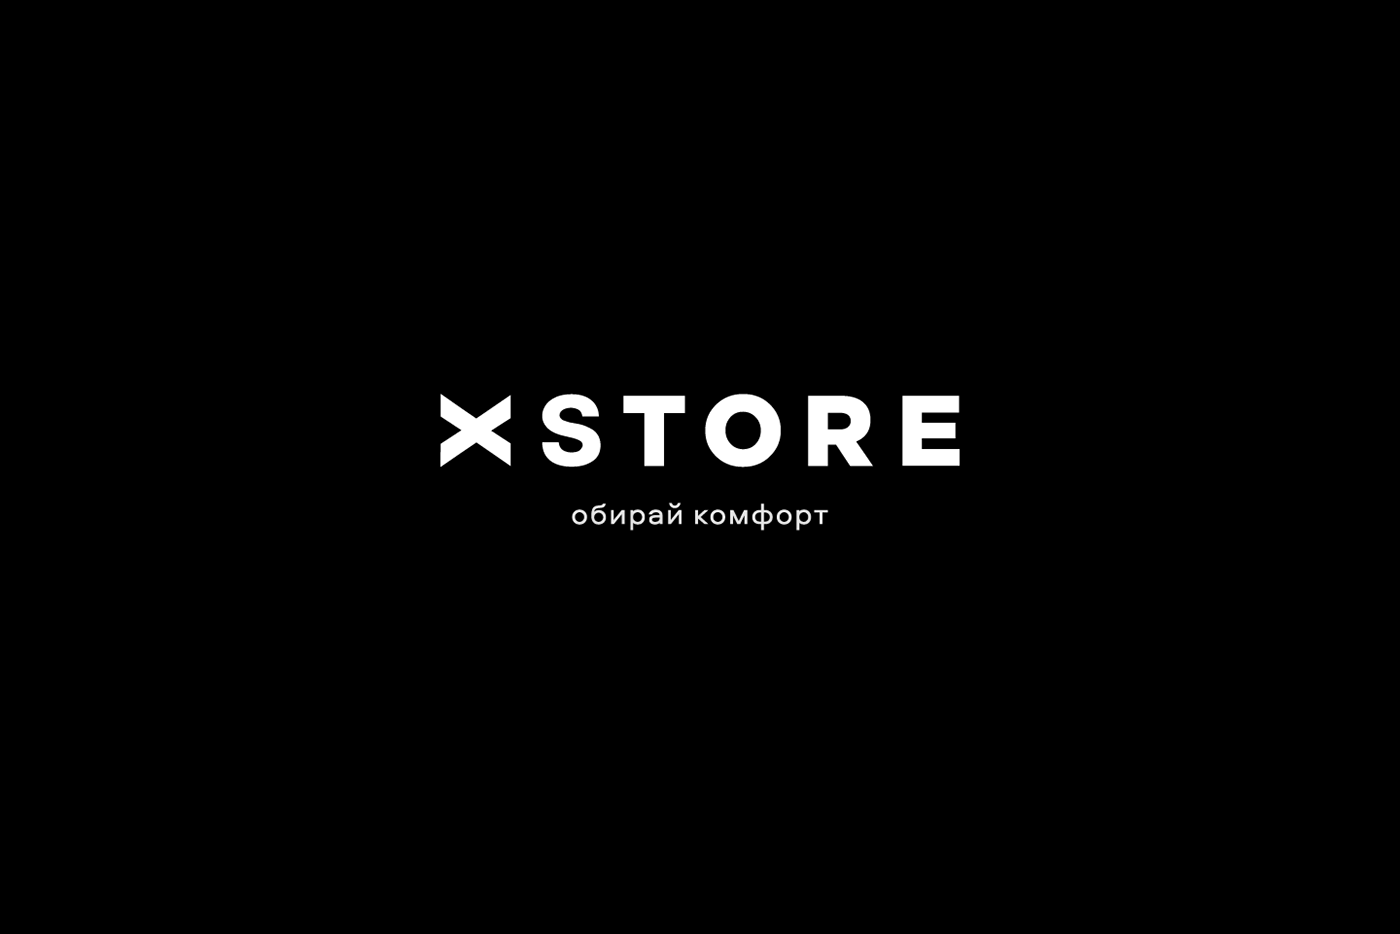 X-store